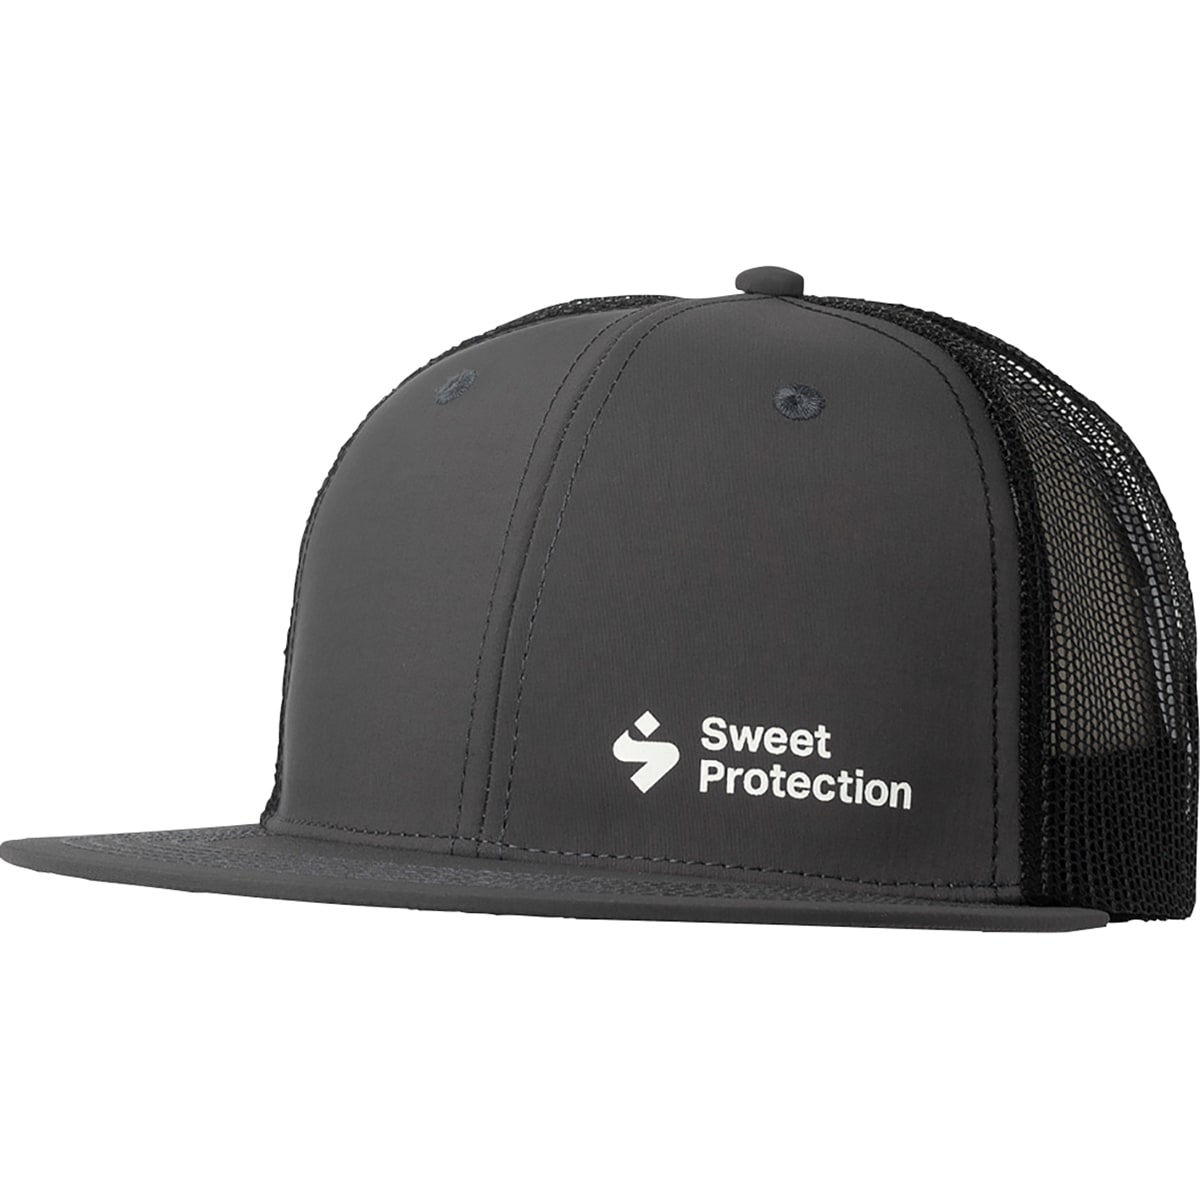 Sweet Protection Corporate Trucker Cap Stone Gray